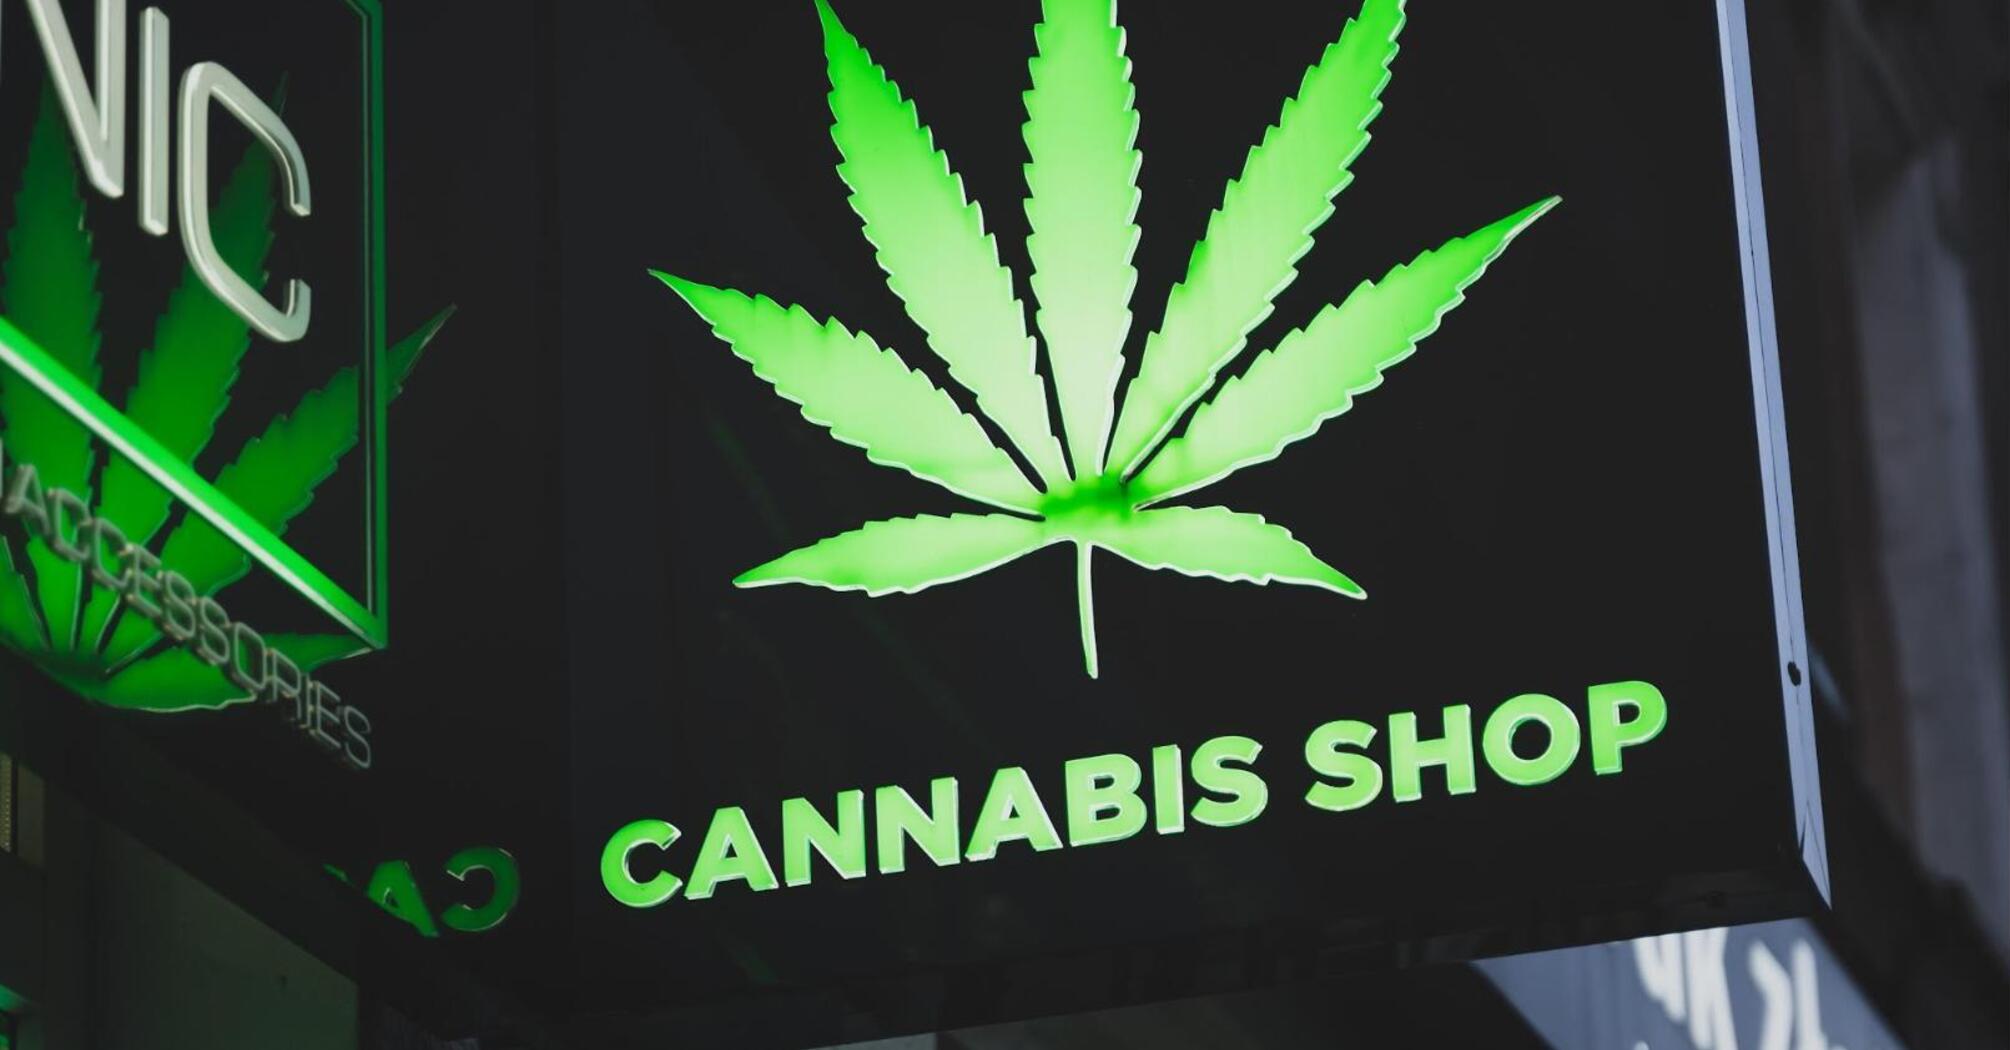 Illuminated "CANNABIS SHOP" sign with a cannabis leaf image